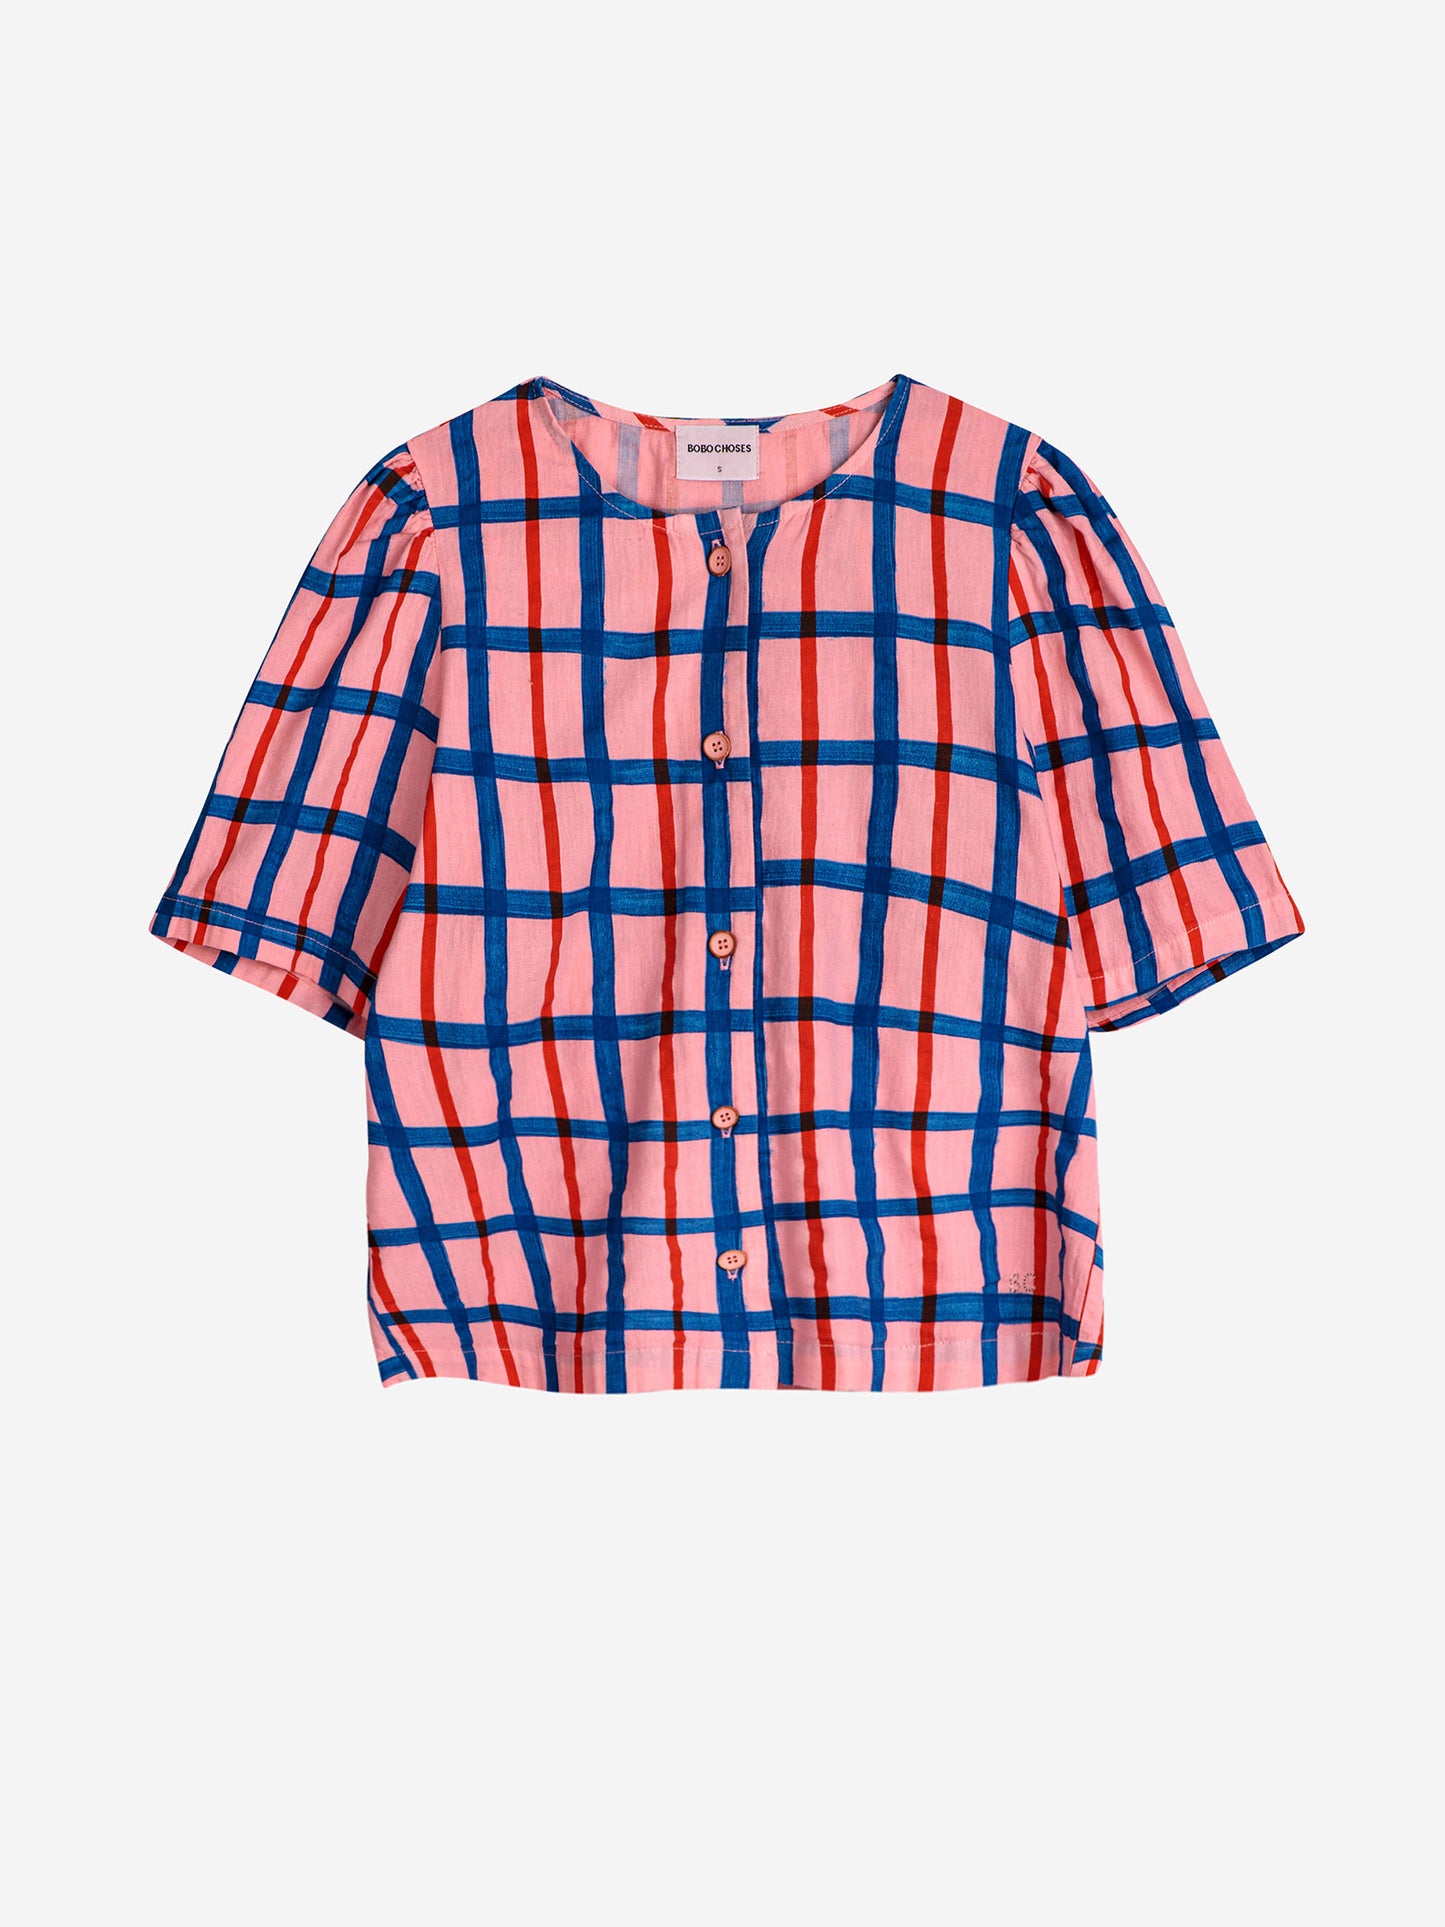 Multicolored check print shirt